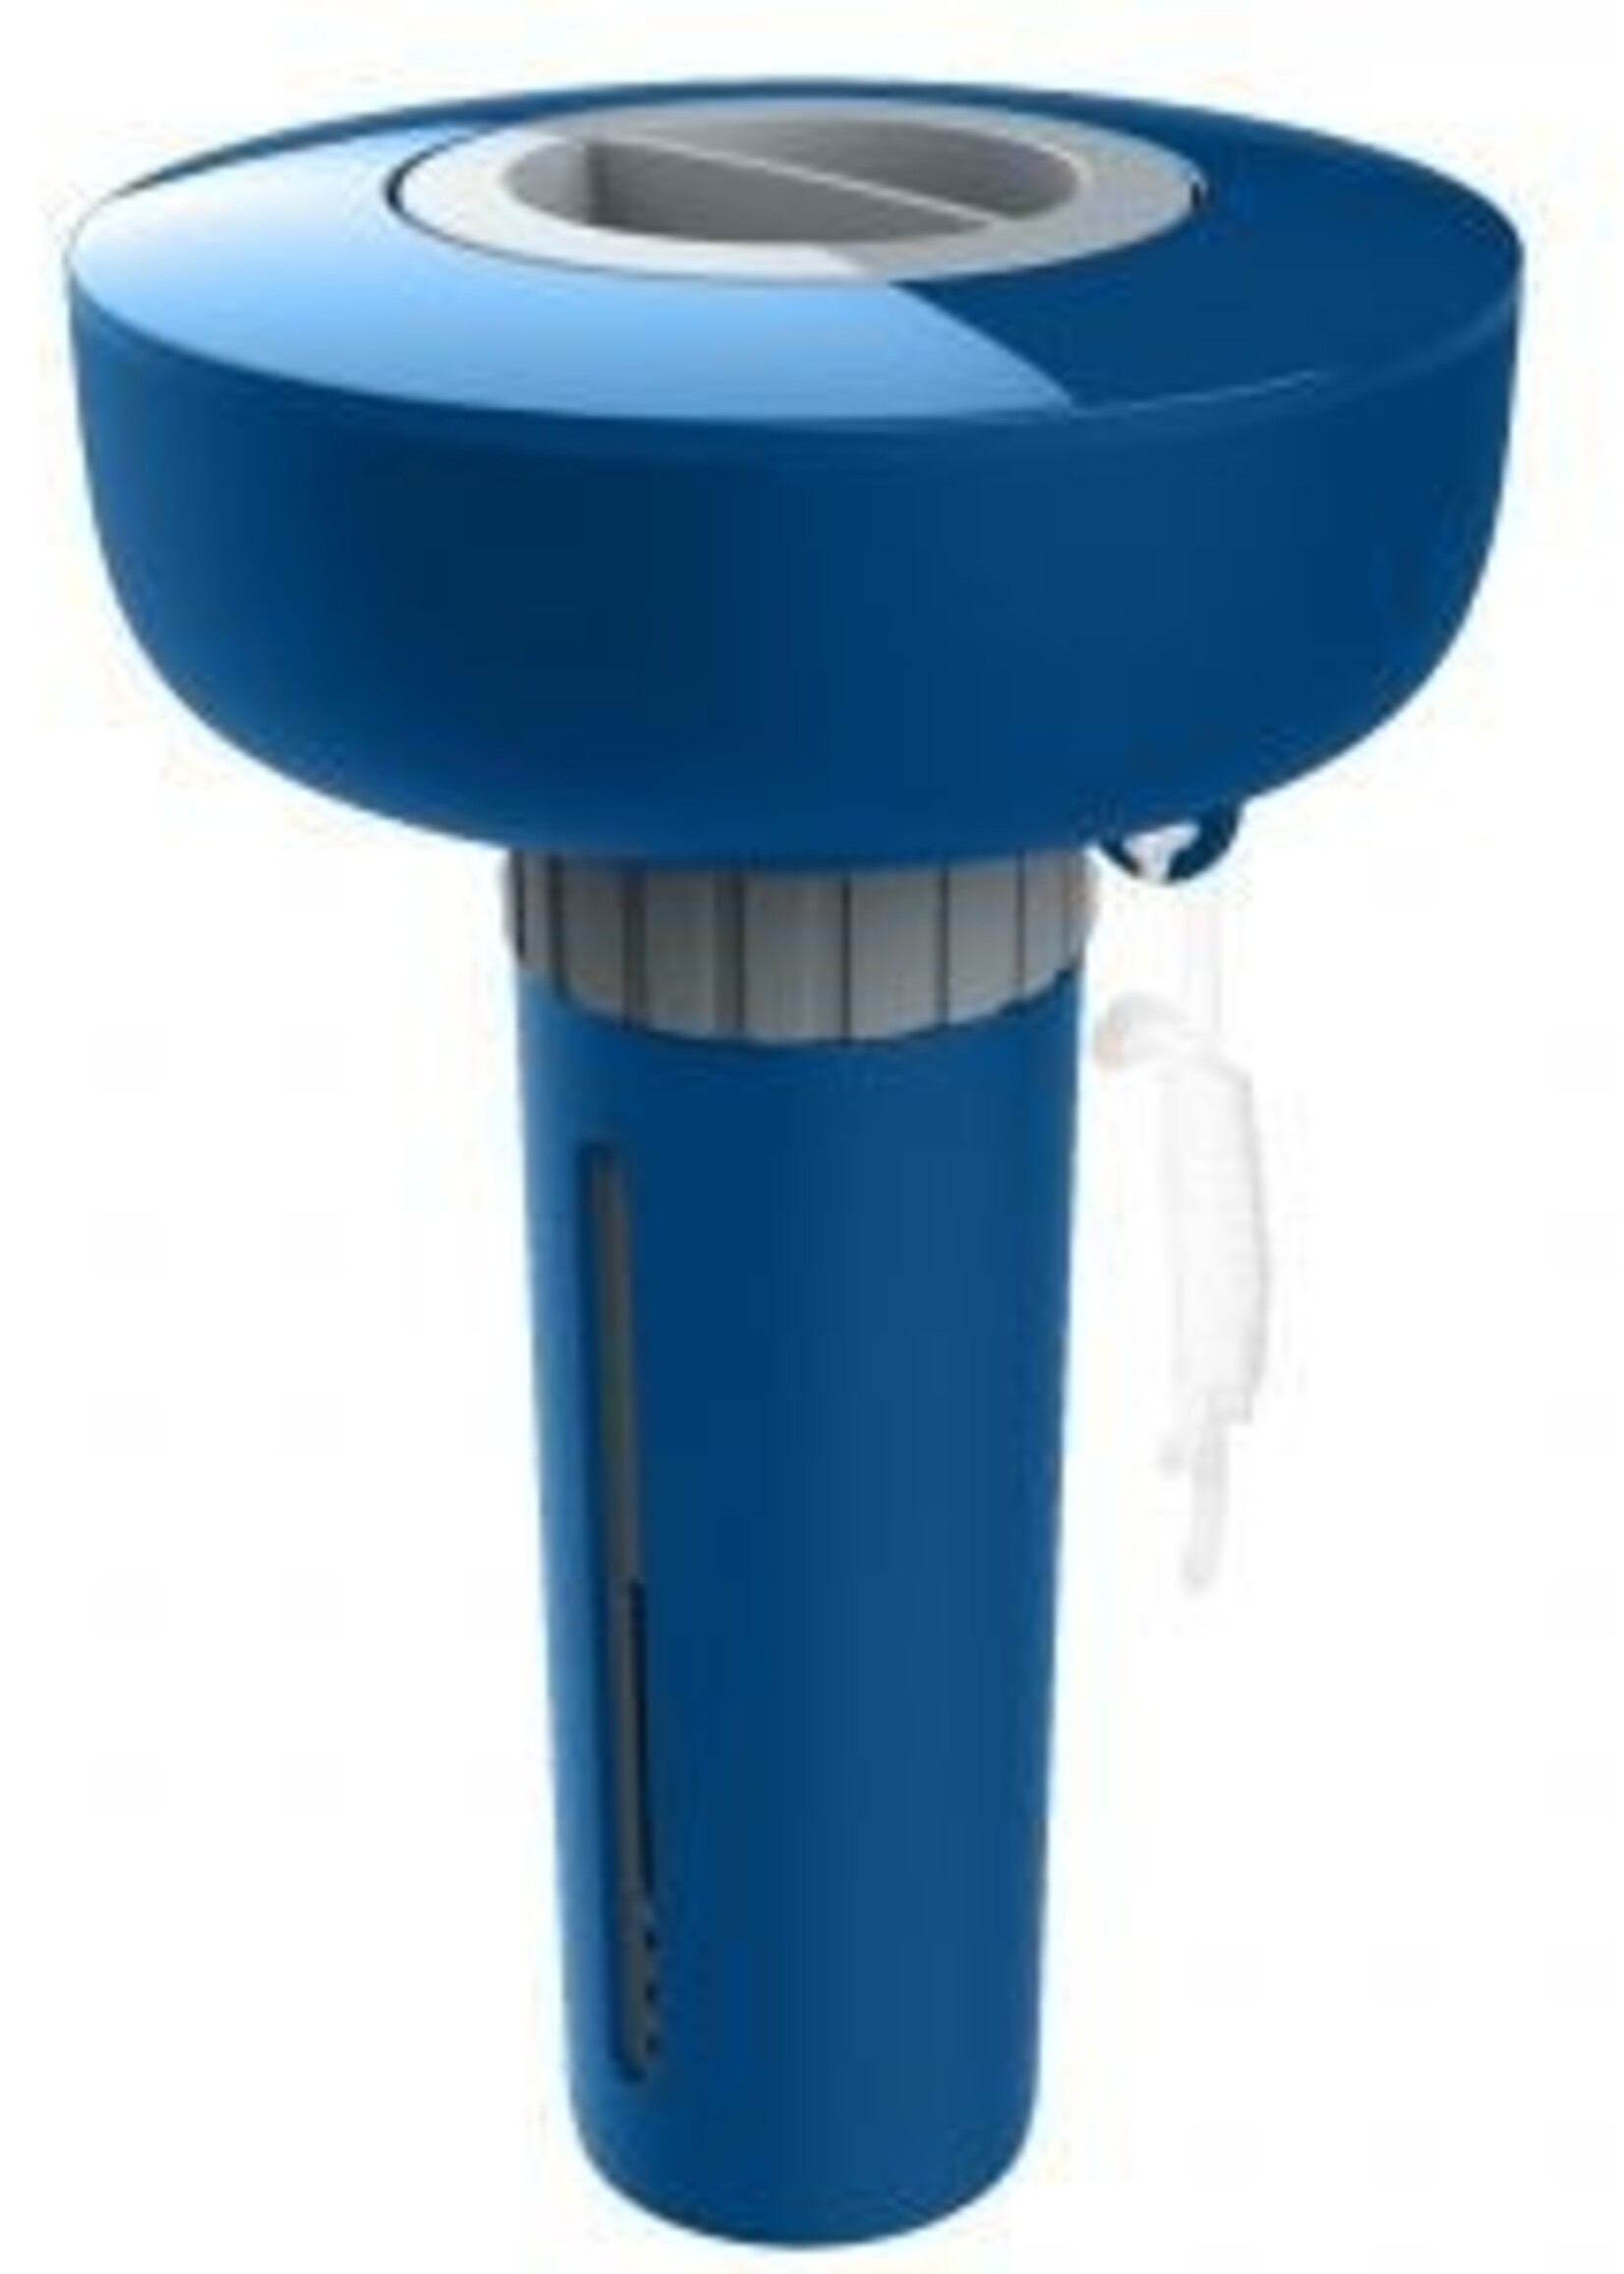 Essentials Essentials Bromine Dispenser Floater (Blue)